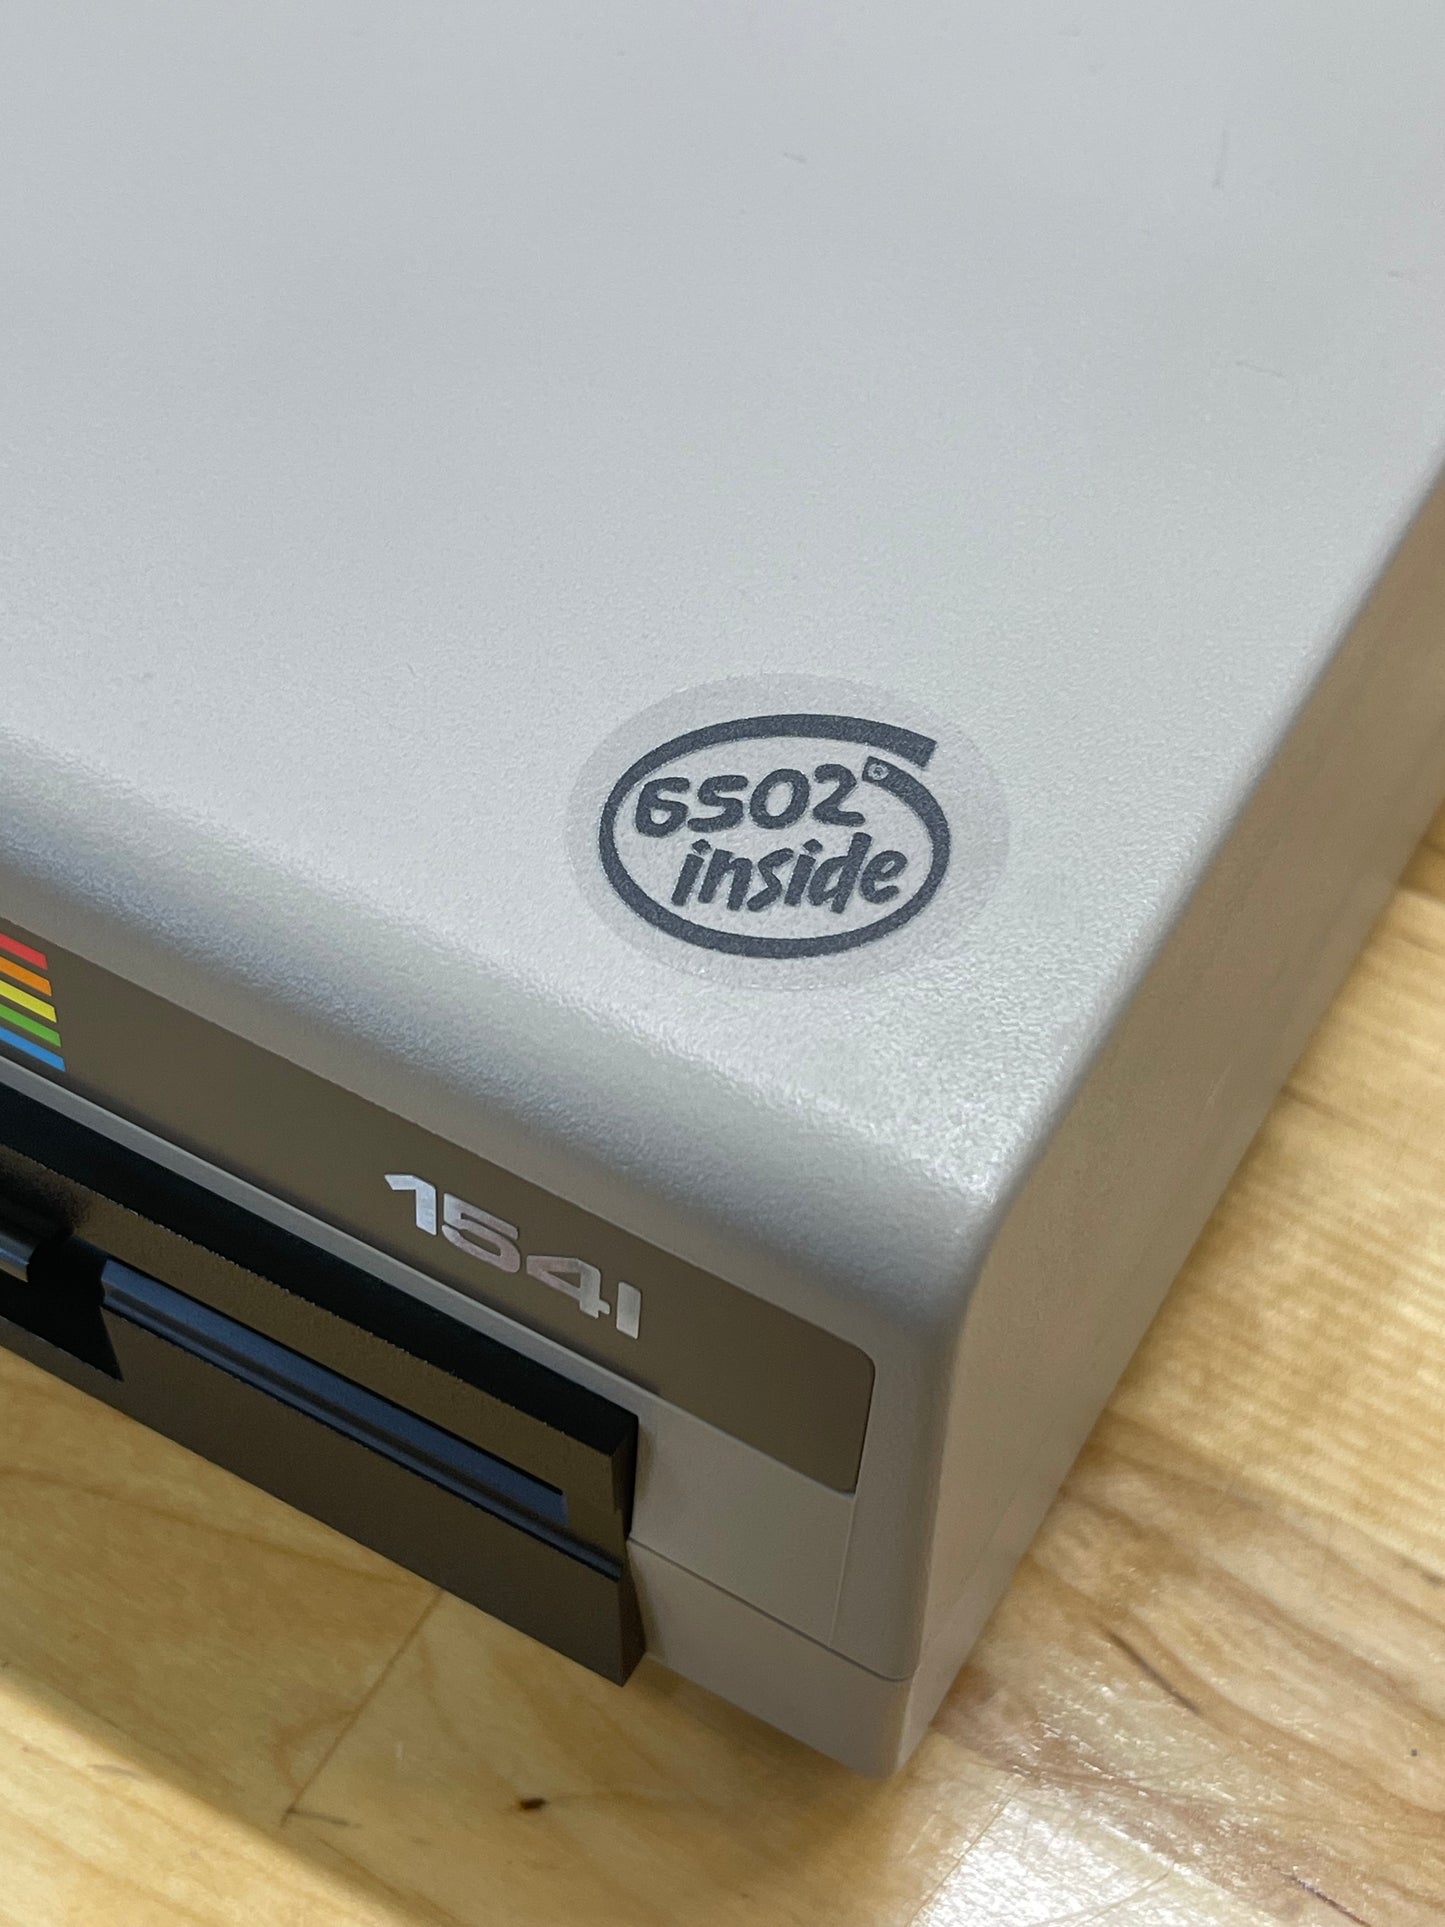 “6502 inside” MOS Commodore C64 Atari Apple Case Badge Sticker - Clear